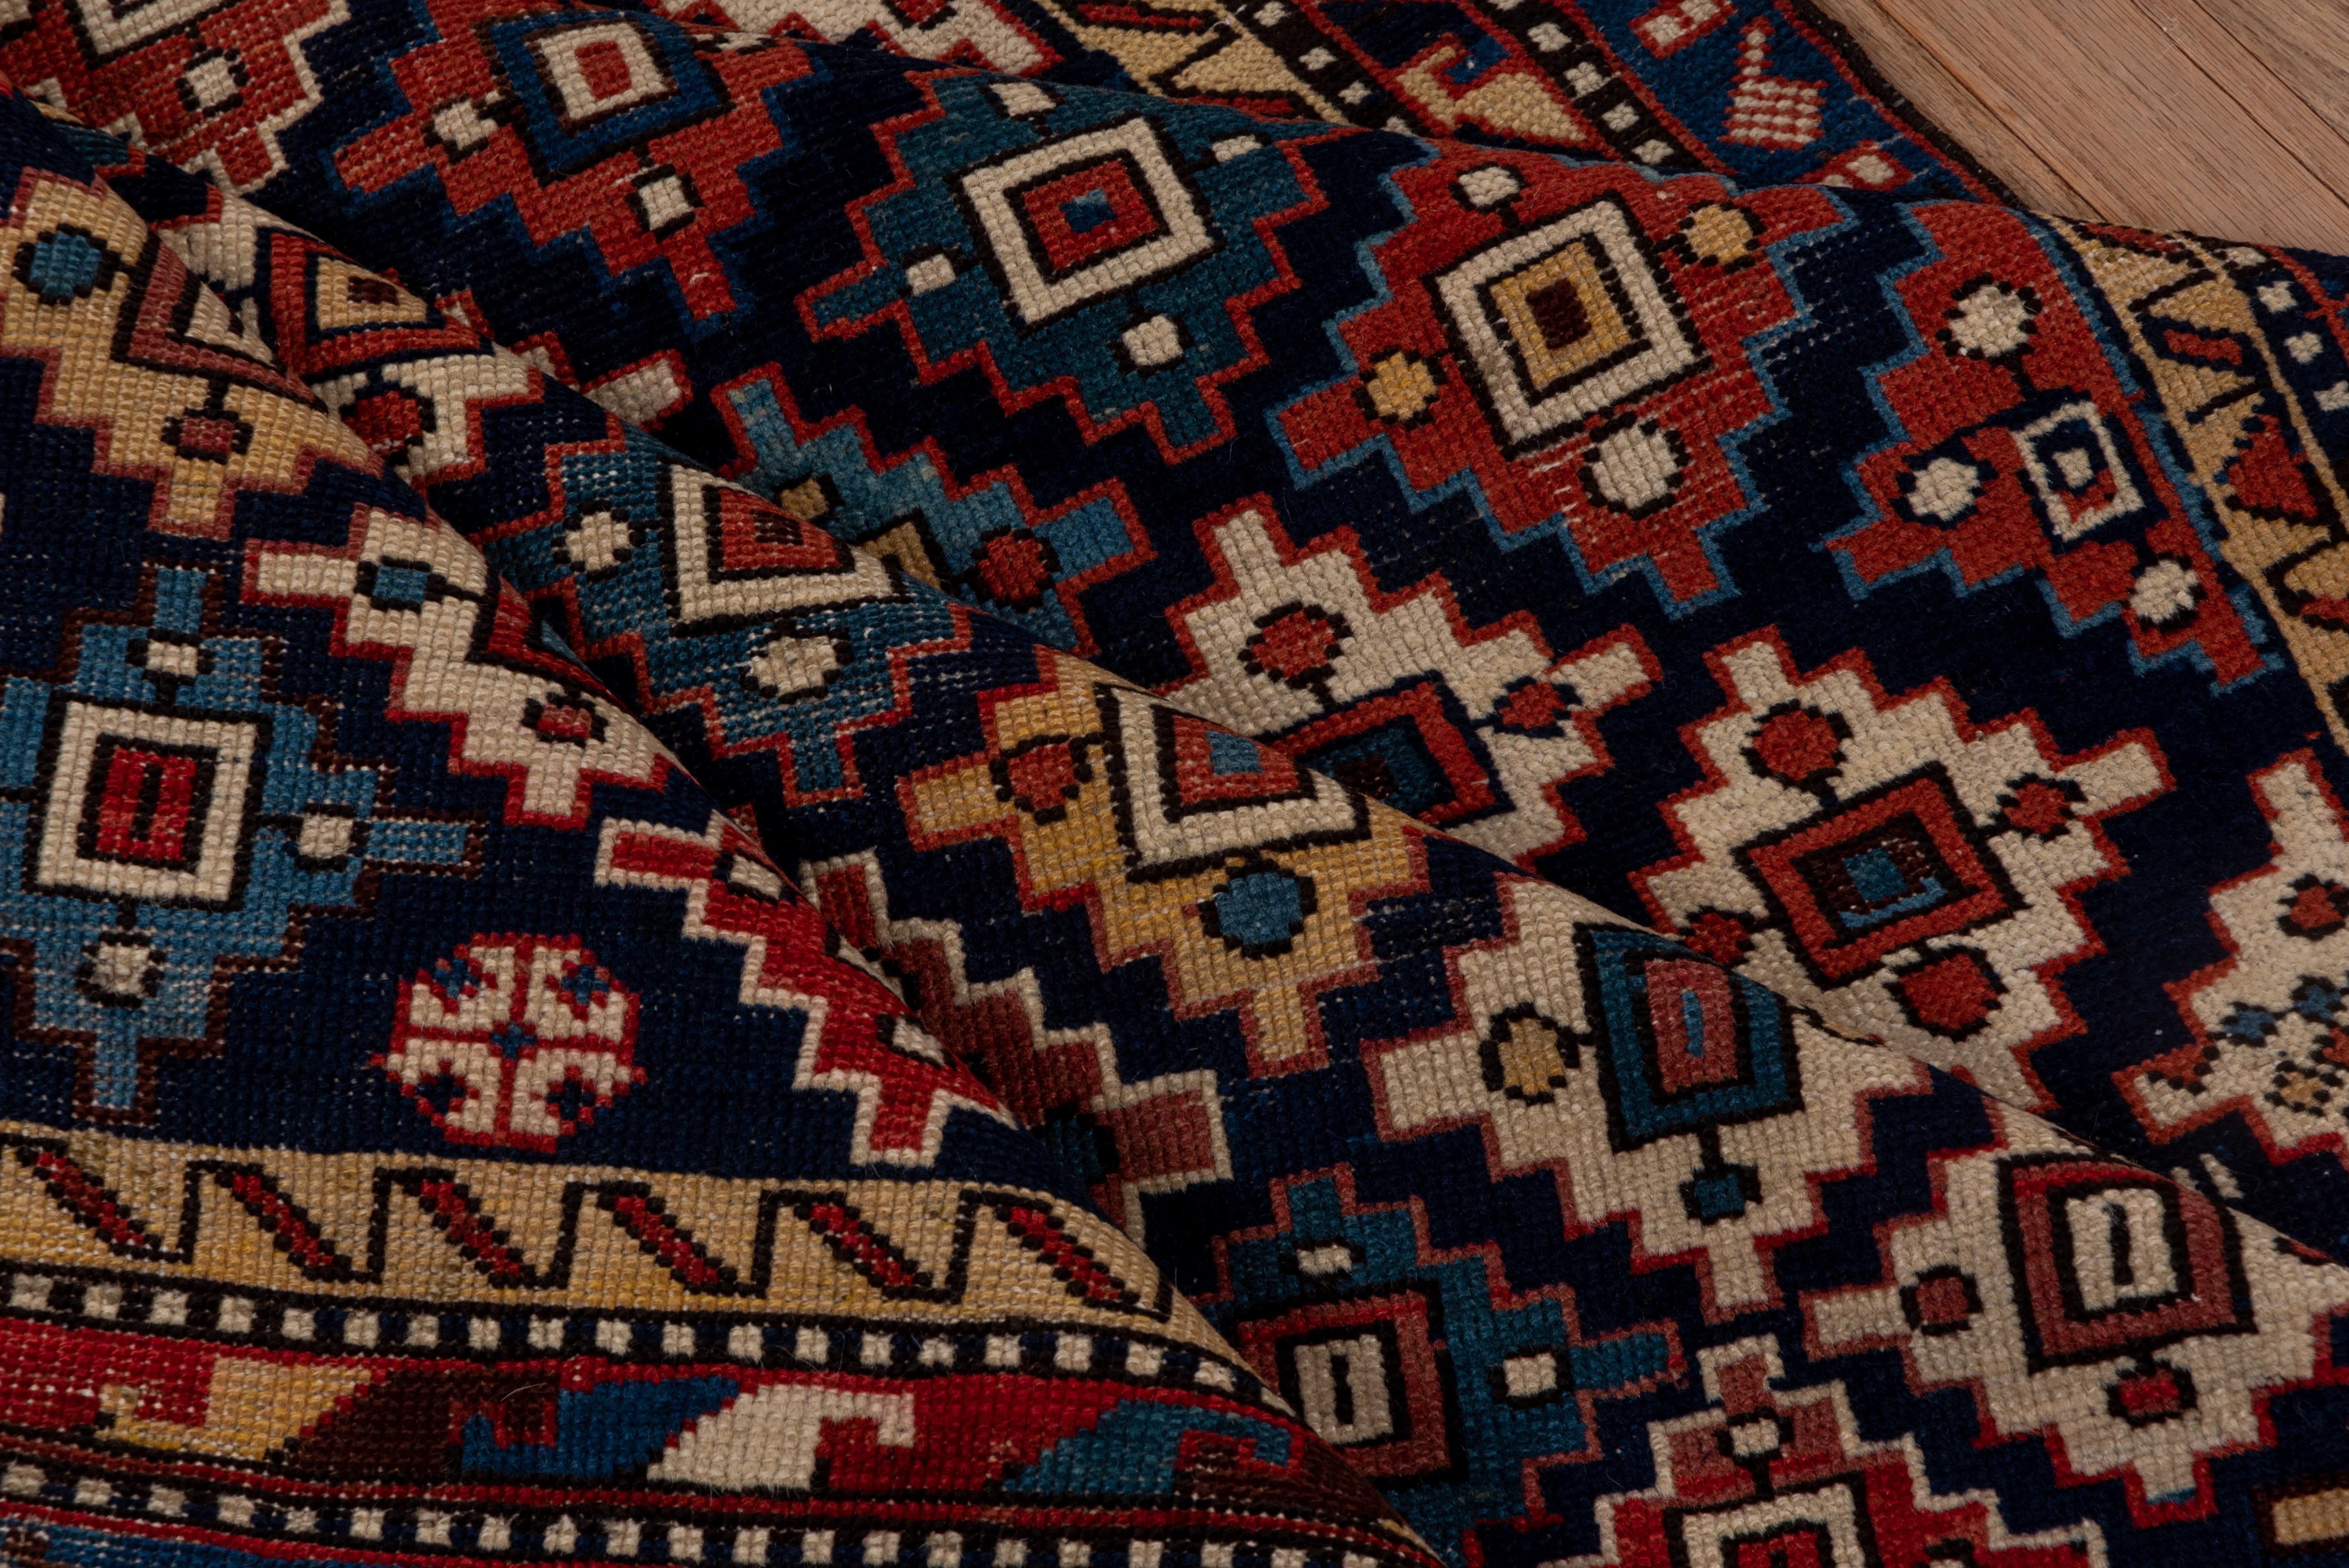 Tribal Antique Caucasian Shirvan Rug, Geometric Field, Red, Navy & Yellow Palette